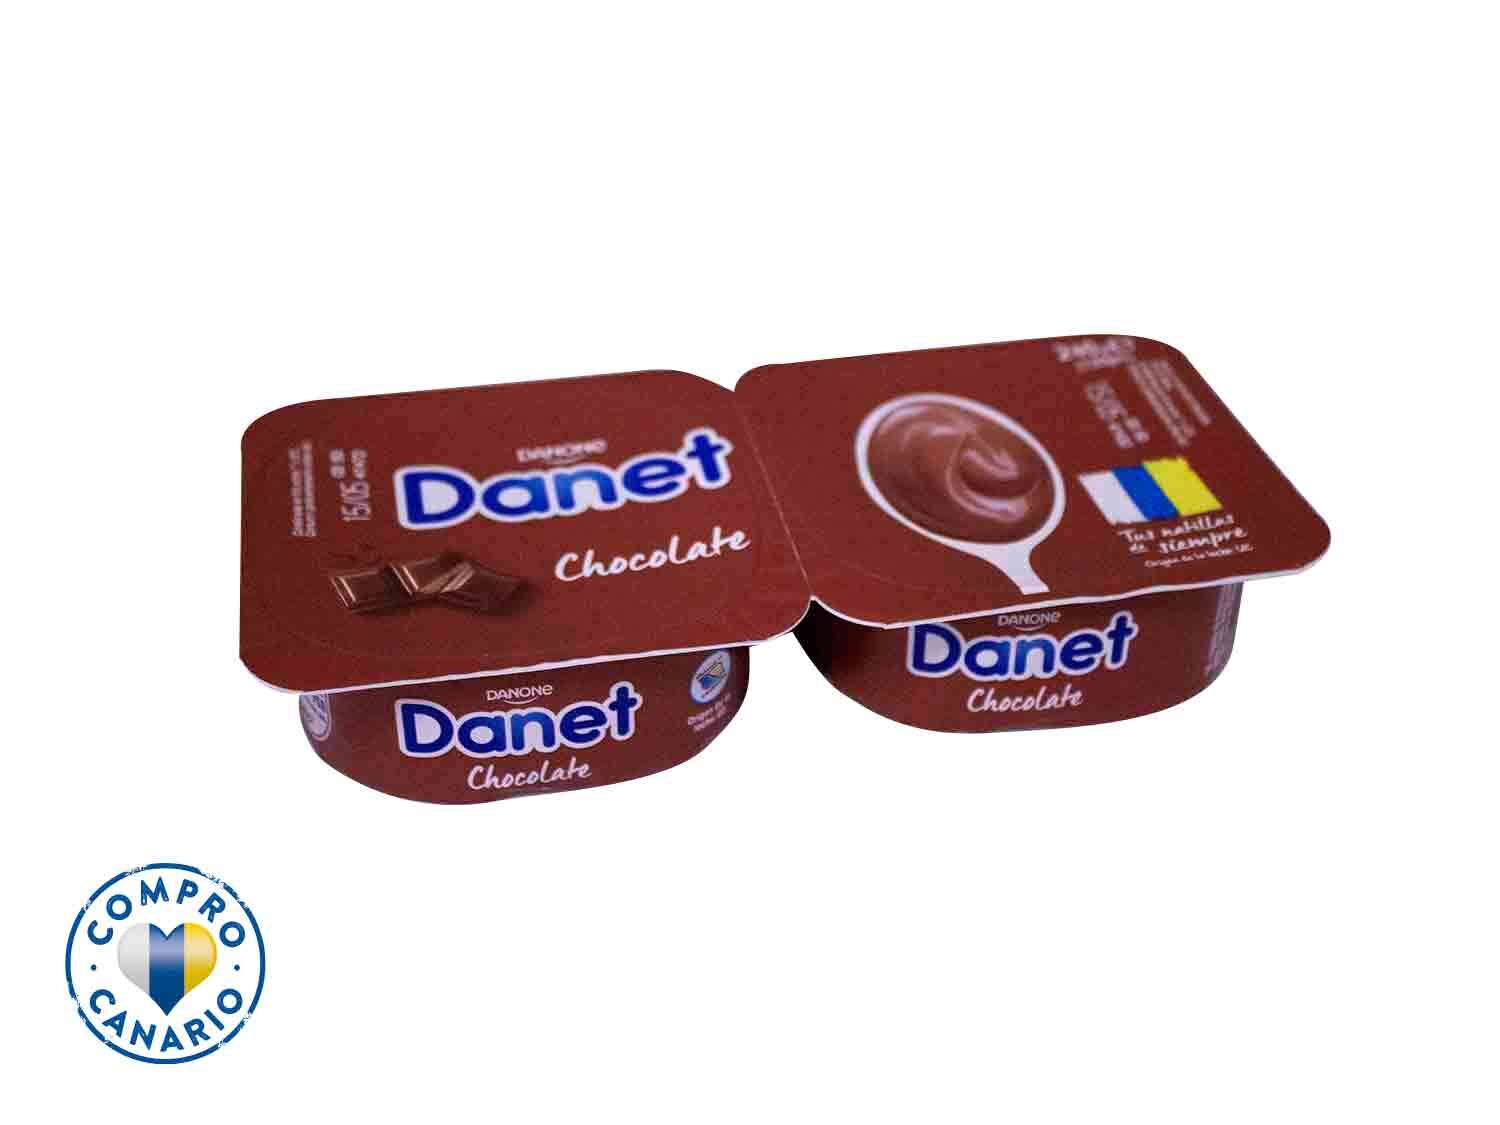 Danone® Danet